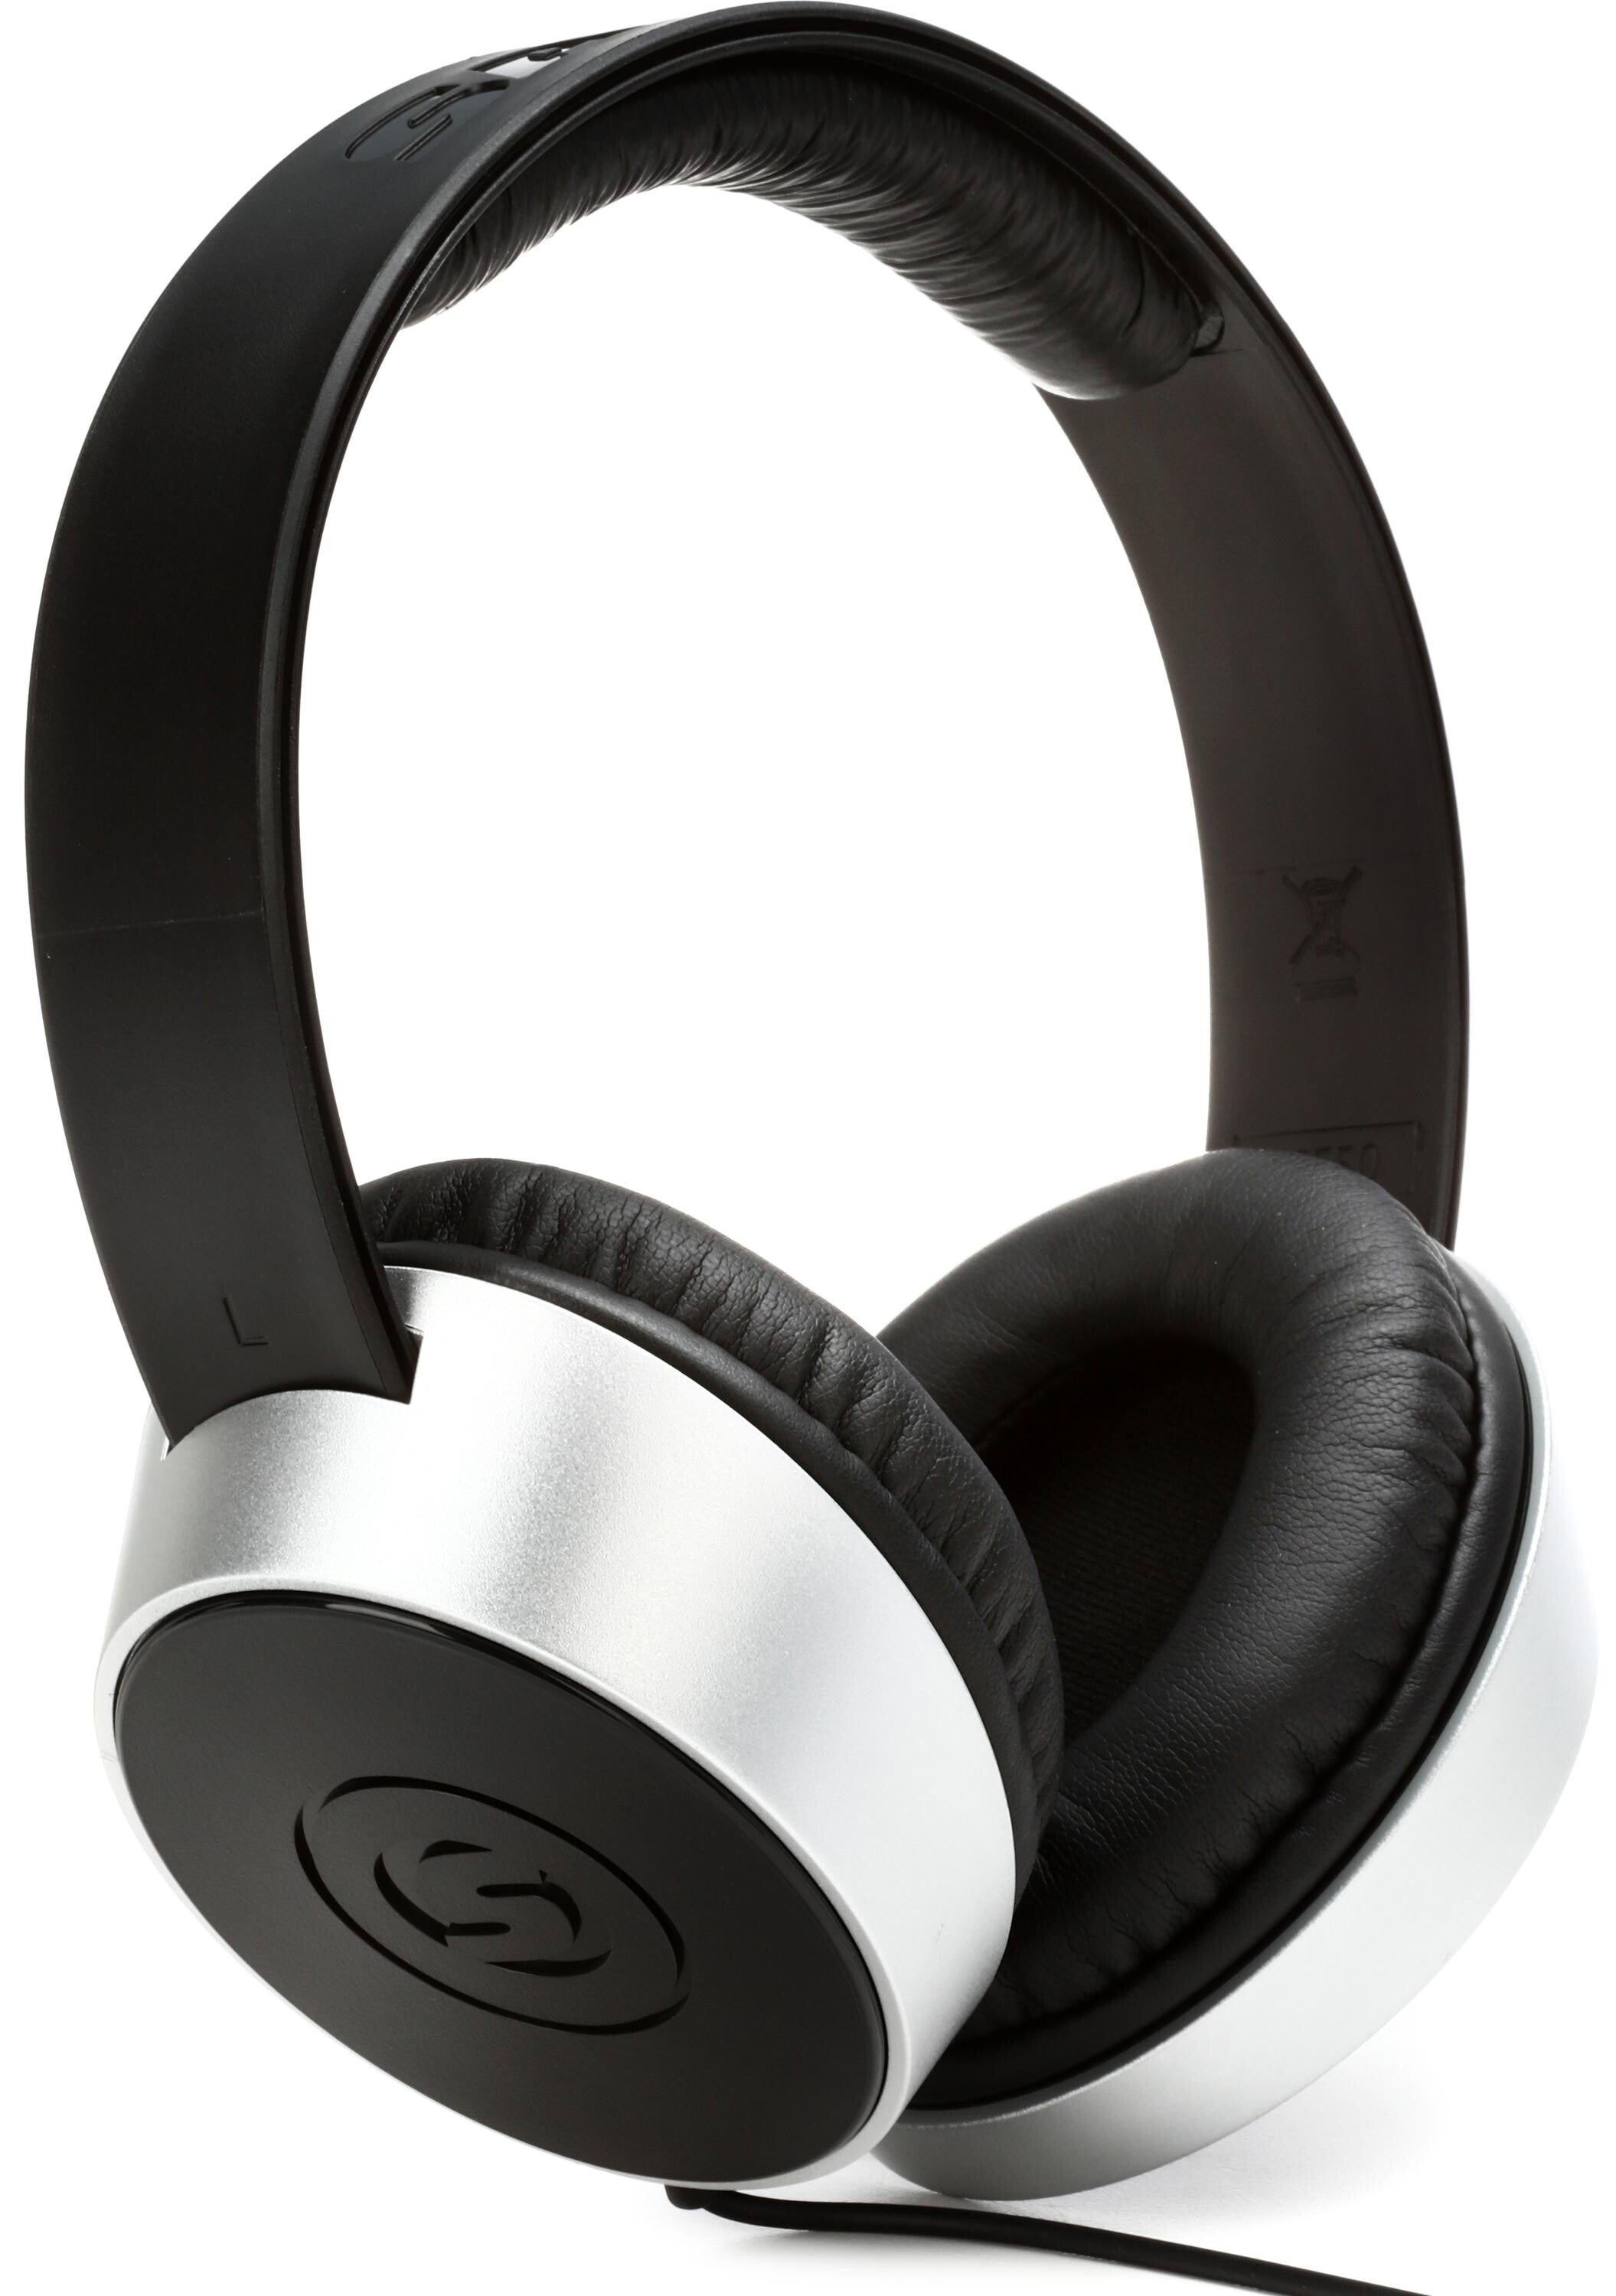 Bundled Item: Samson SR550 Closed-back Studio Headphones